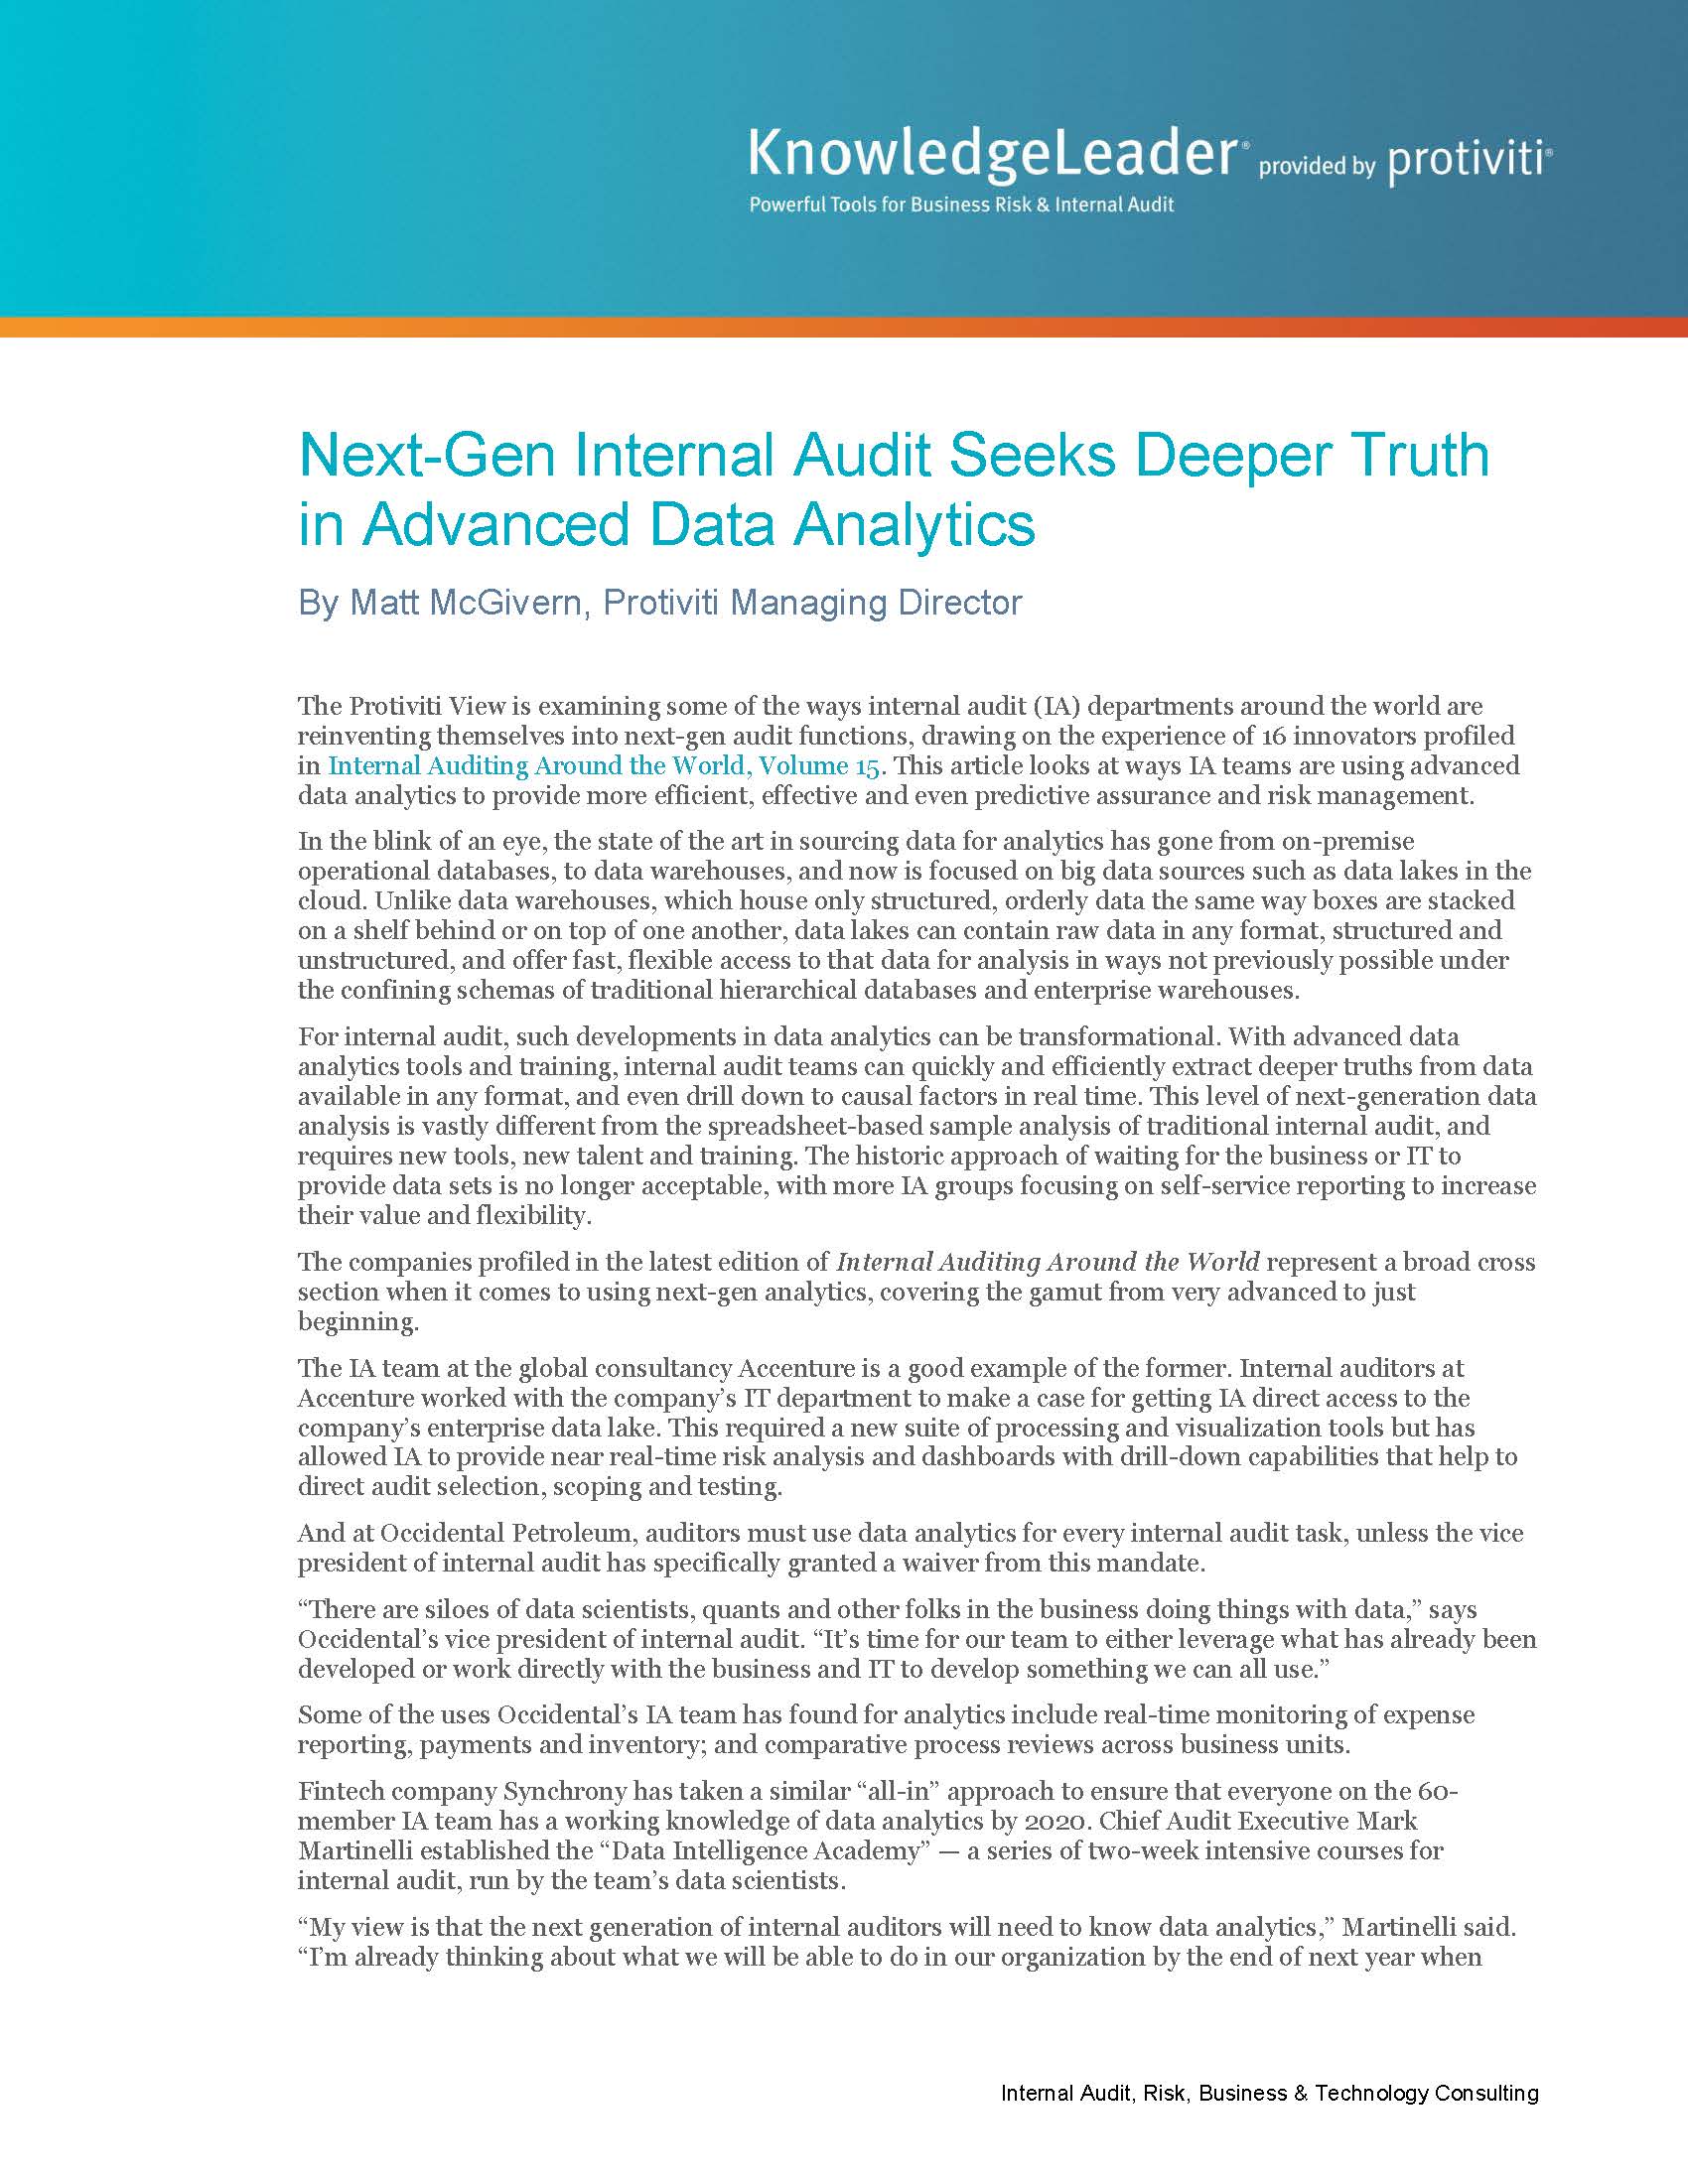 Screenshot of the first page of Next-Gen Internal Audit Seeks Deeper Truth in Advanced Data Analytics